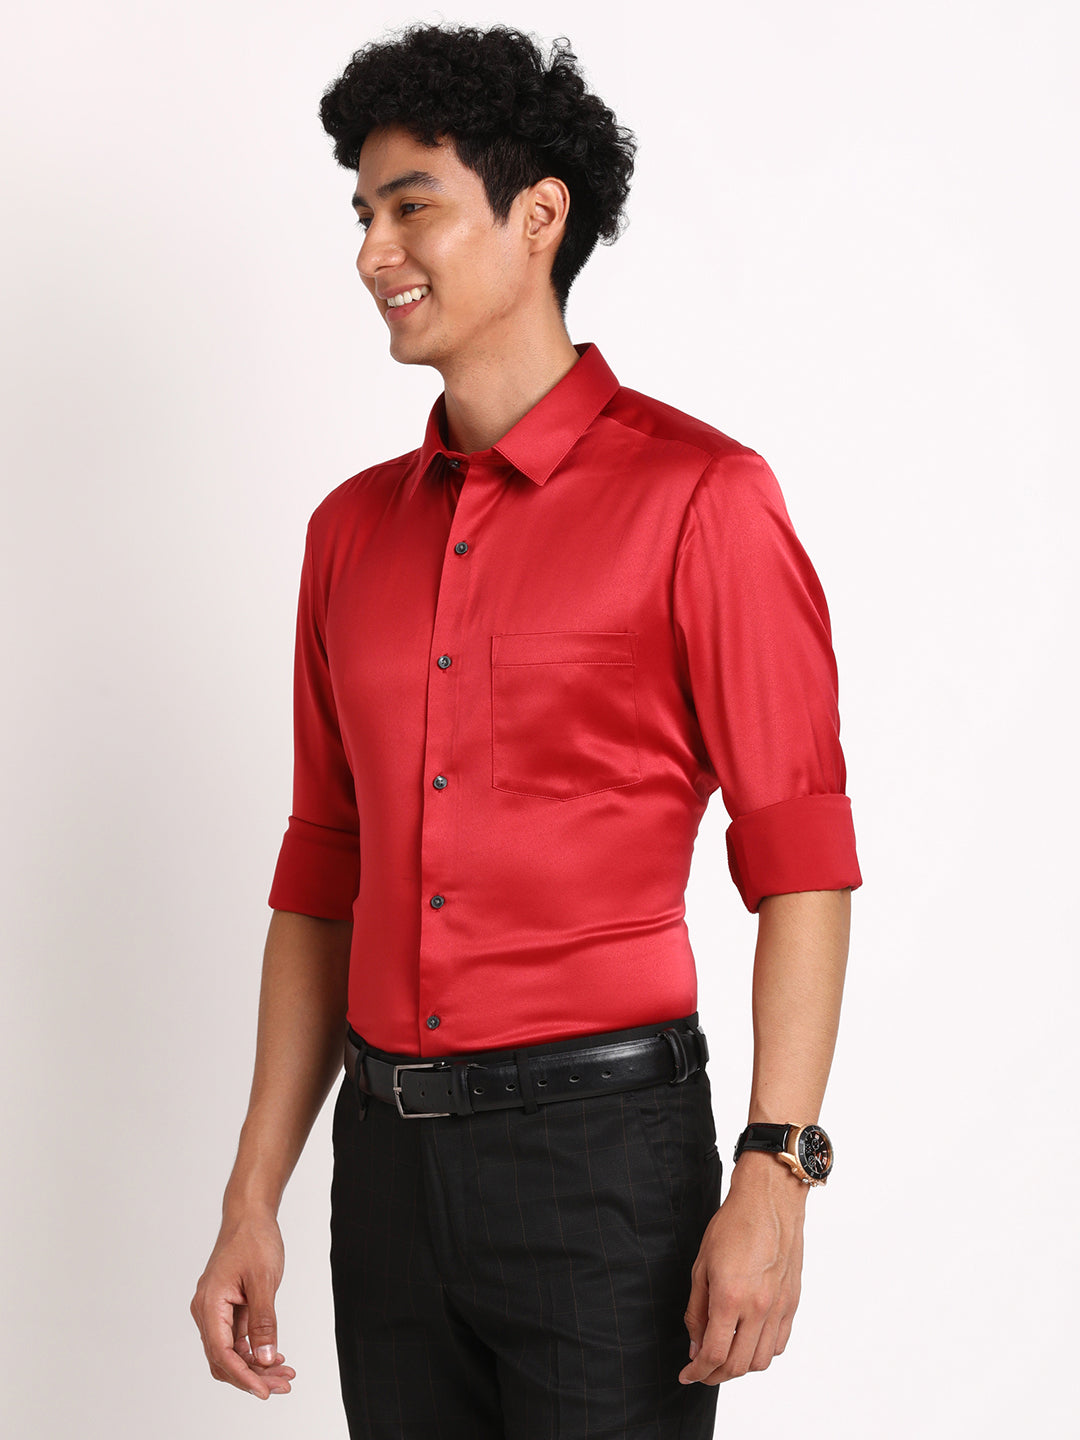 Poly Satin Red Plain Regular Fit Full Sleeve Ceremonial Shirt